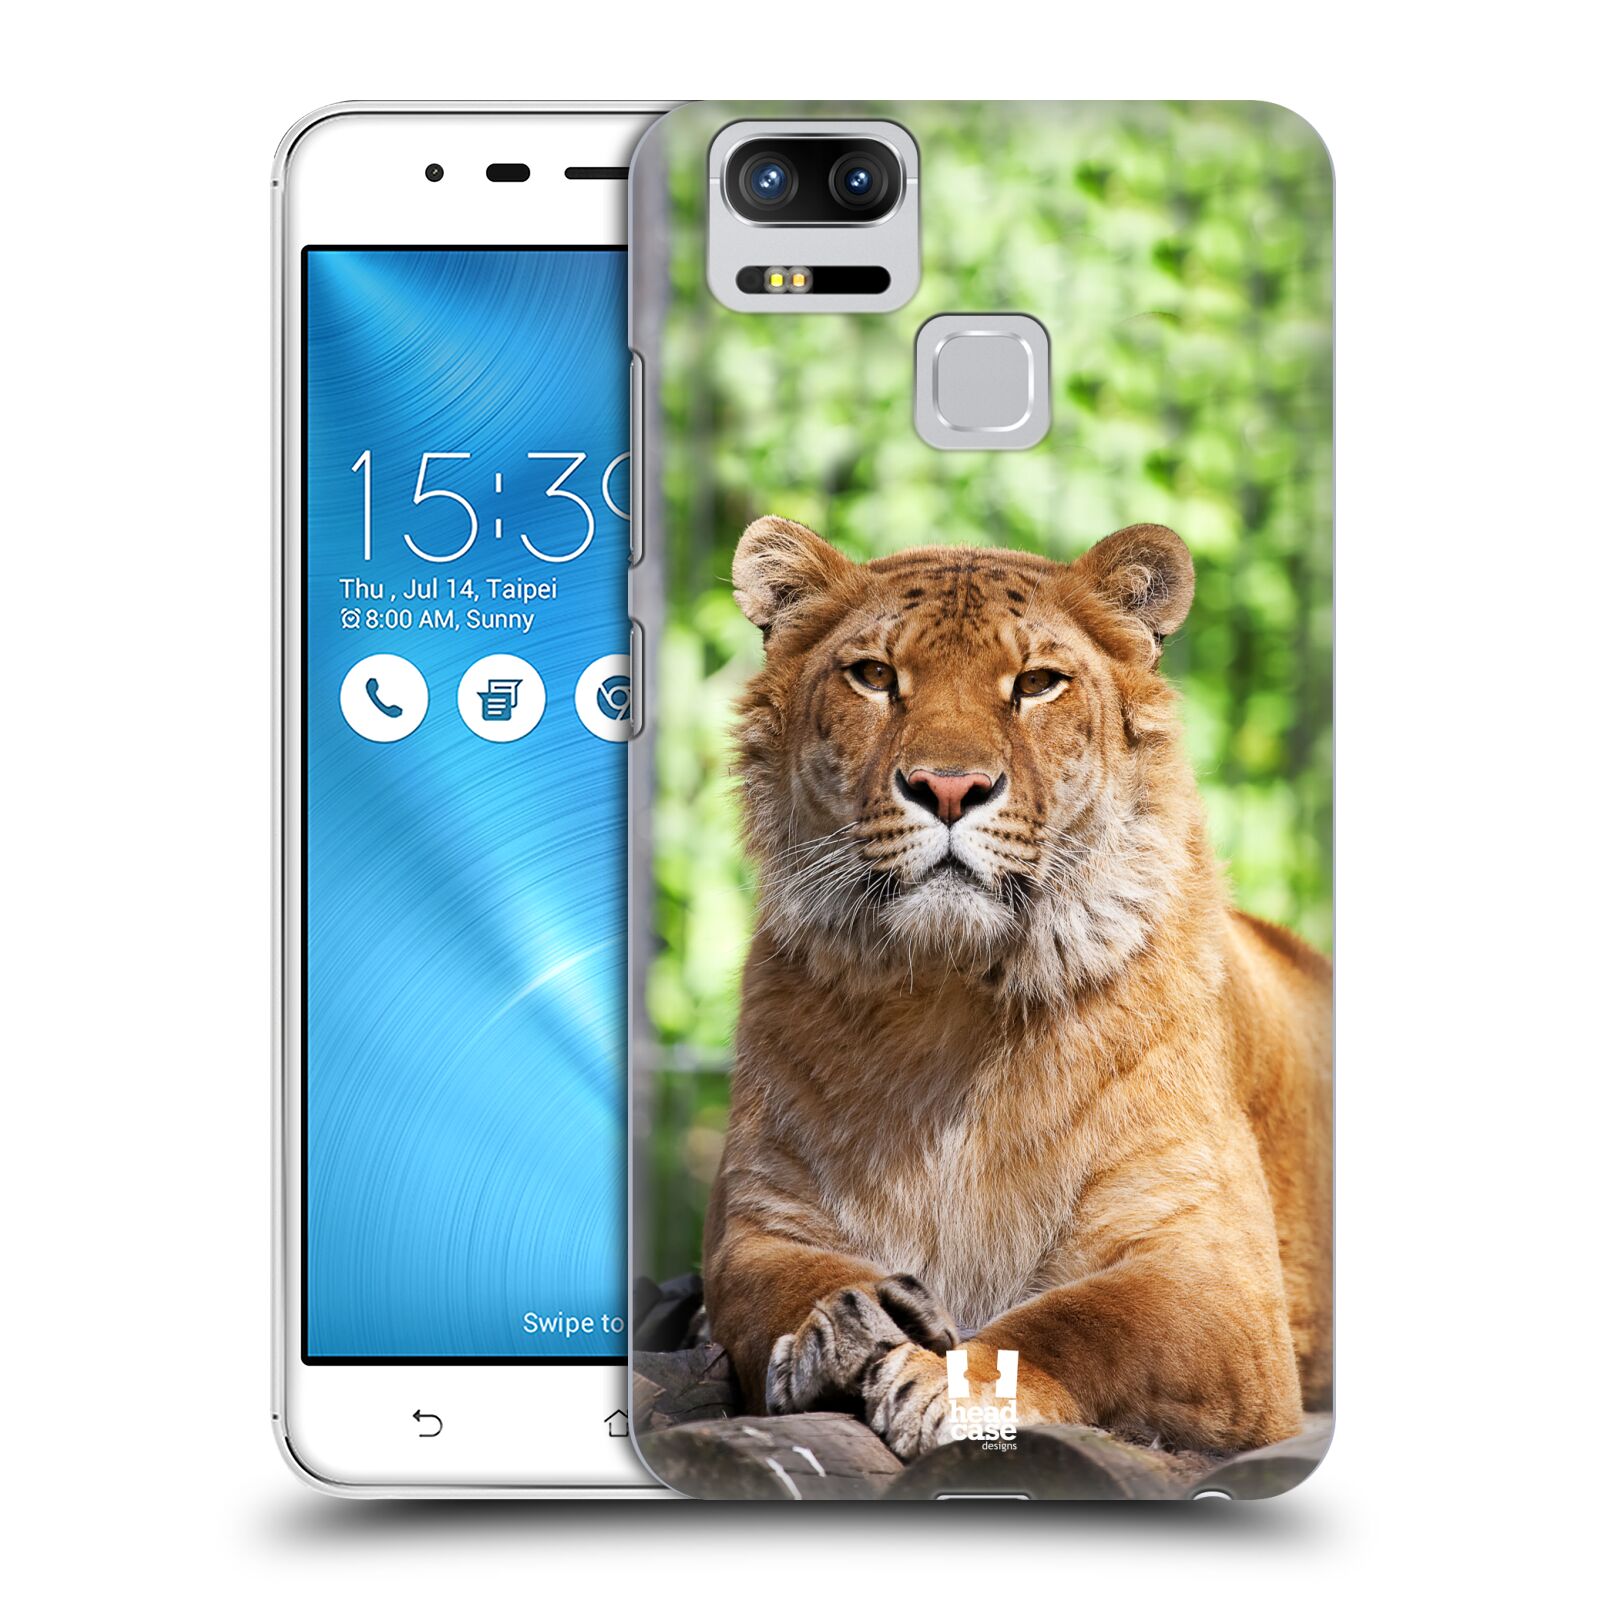 HEAD CASE plastový obal na mobil Asus Zenfone 3 Zoom ZE553KL vzor slavná zvířata foto tygr